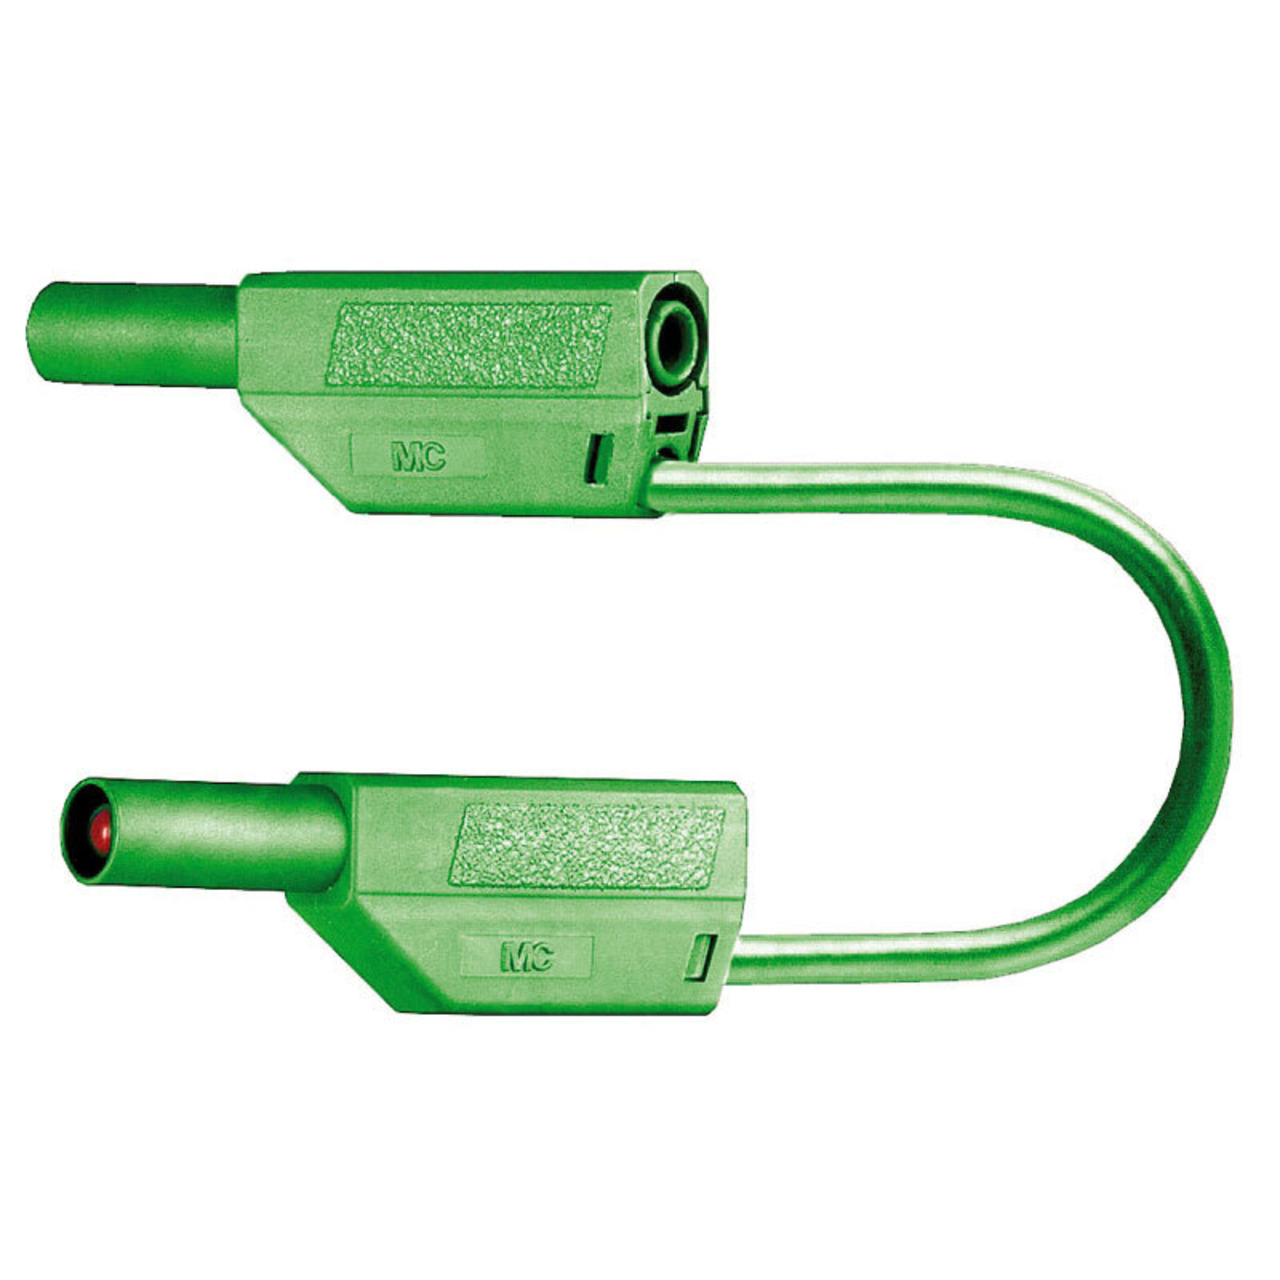 Sicherheitsmessleitungen in PVC (SLK425-E-N) 4mm- 32A- 1m- grün